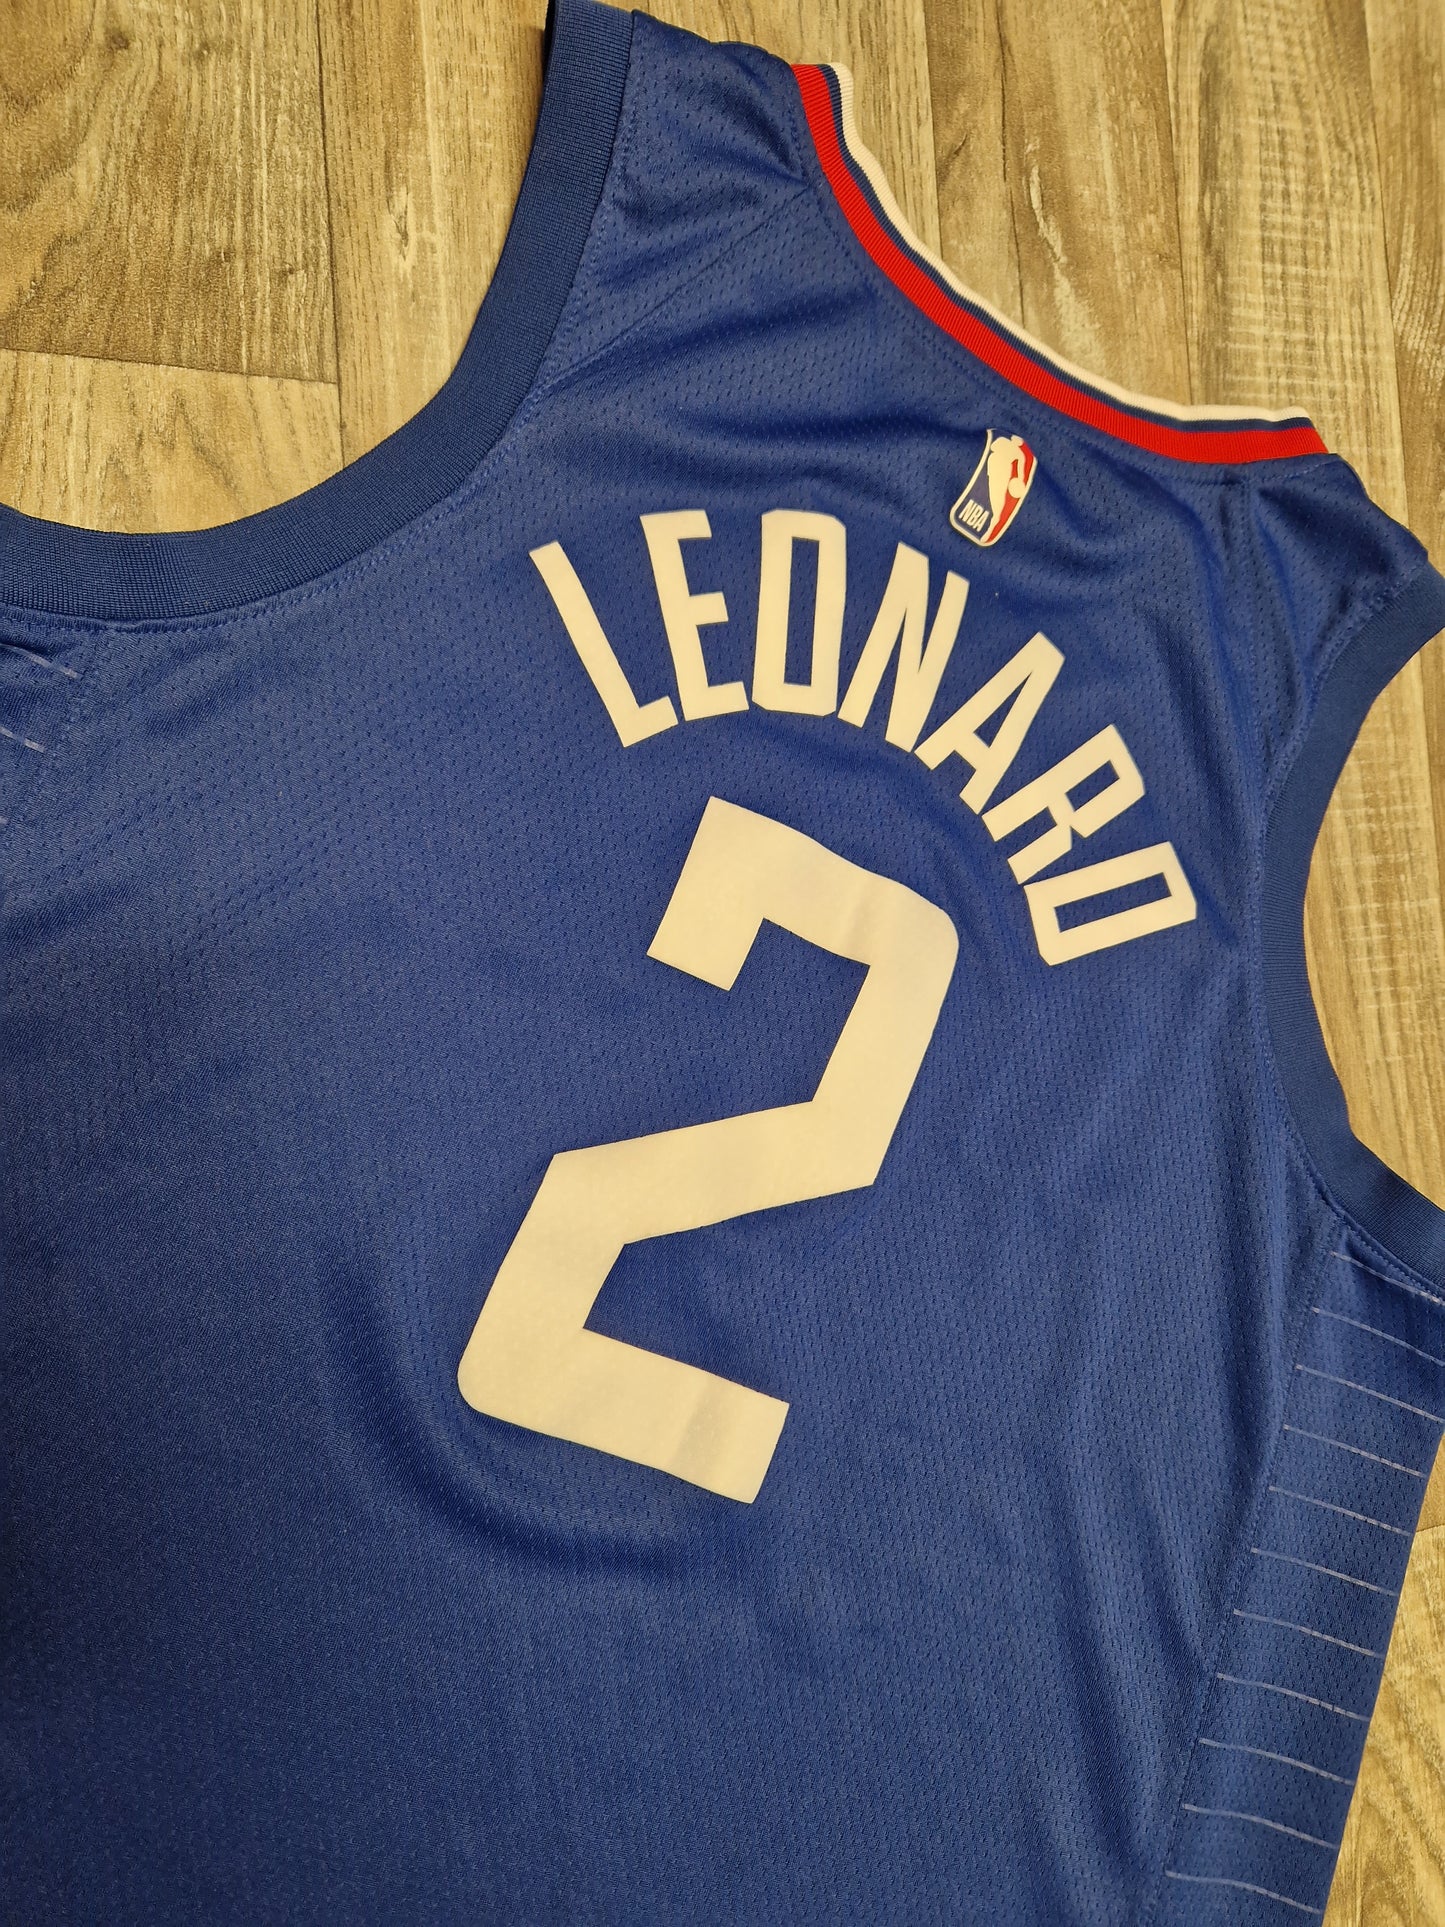 Kawhi Leonard Los Angeles Clippers Jersey Size XL